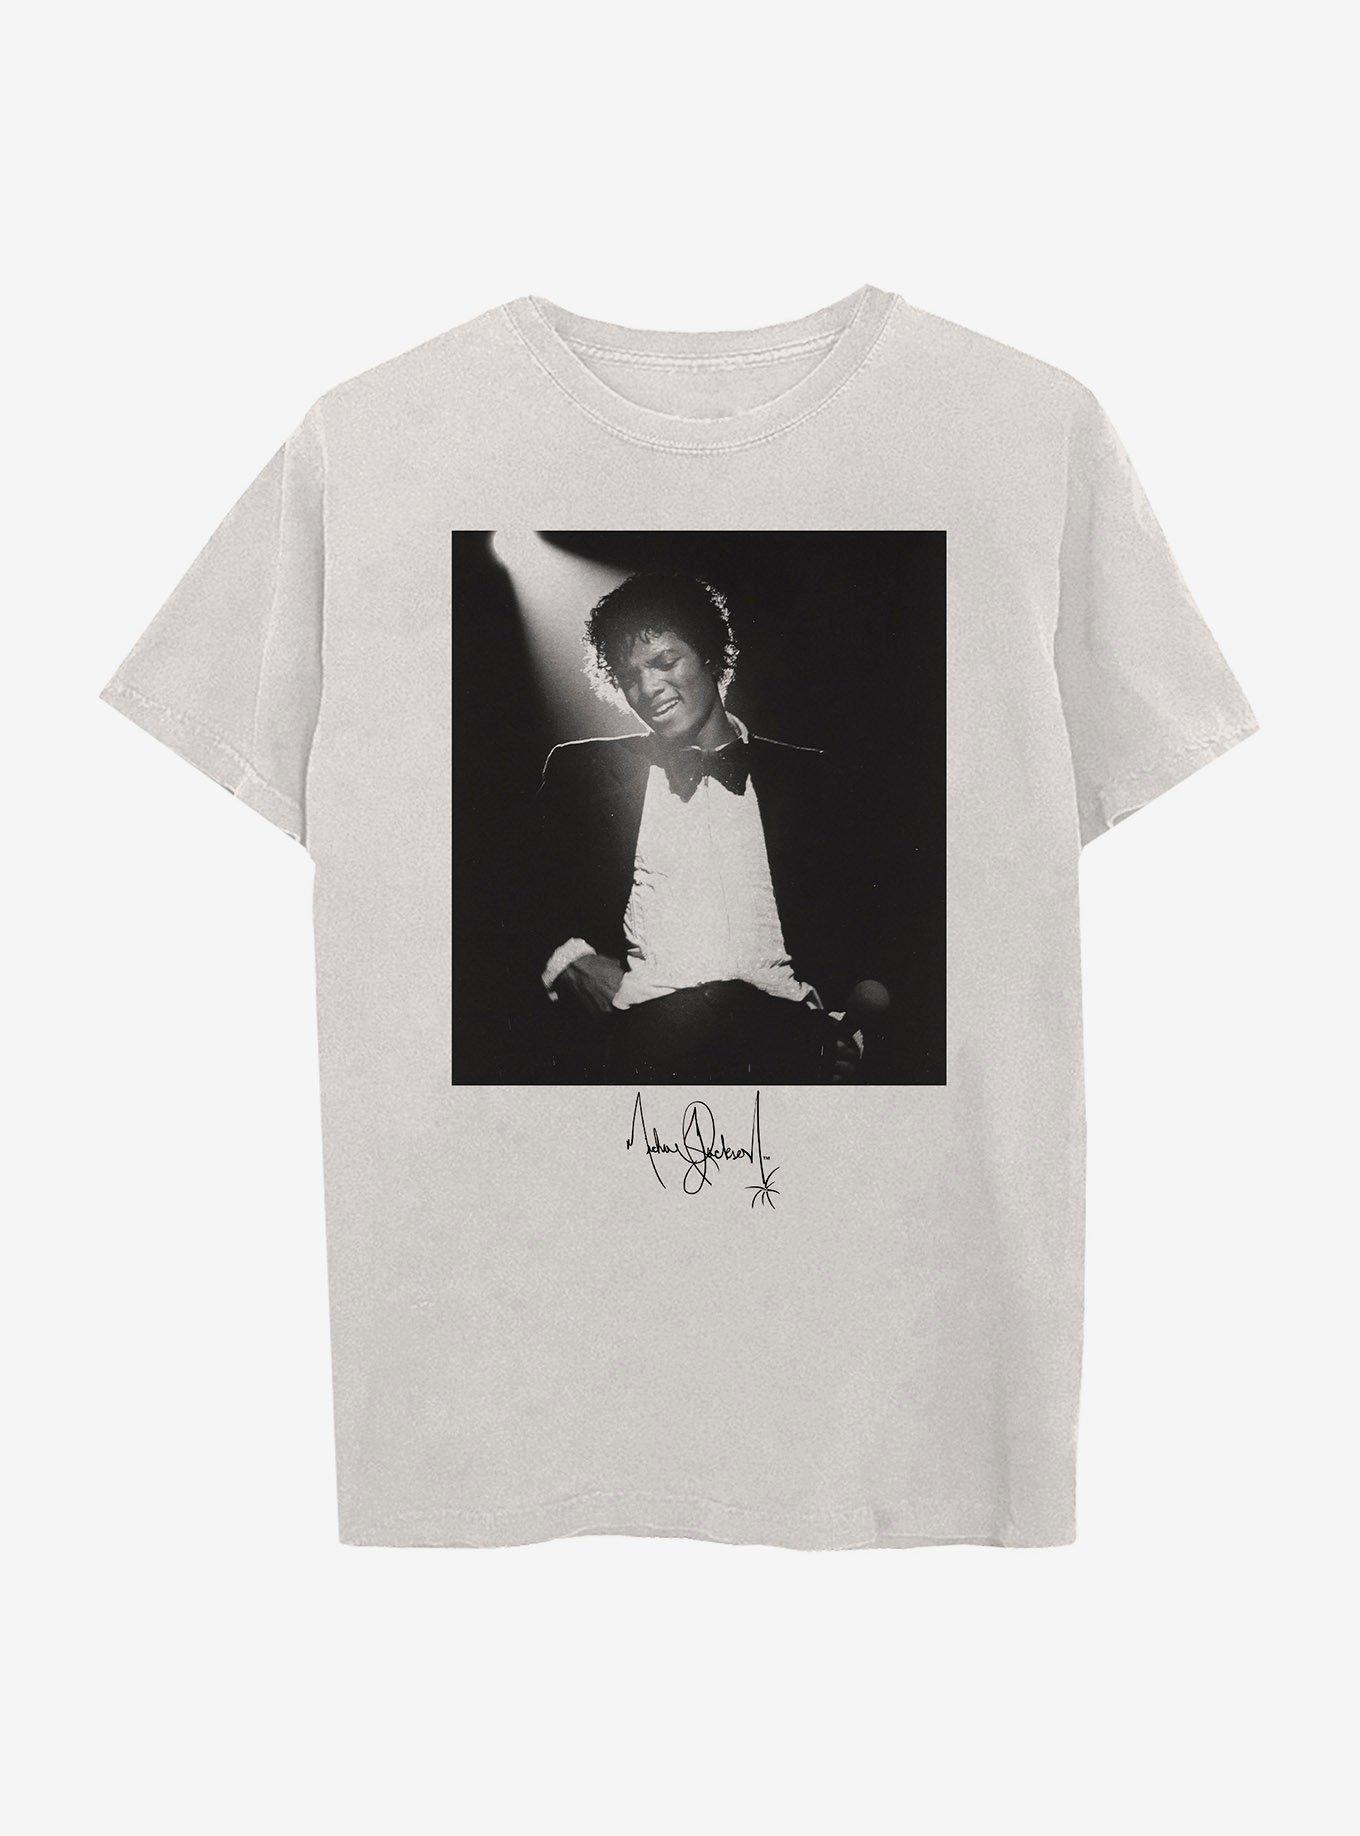 Michael Jackson T-Shirt Mens Medium Black Short Sleeve Music Dance Vintage